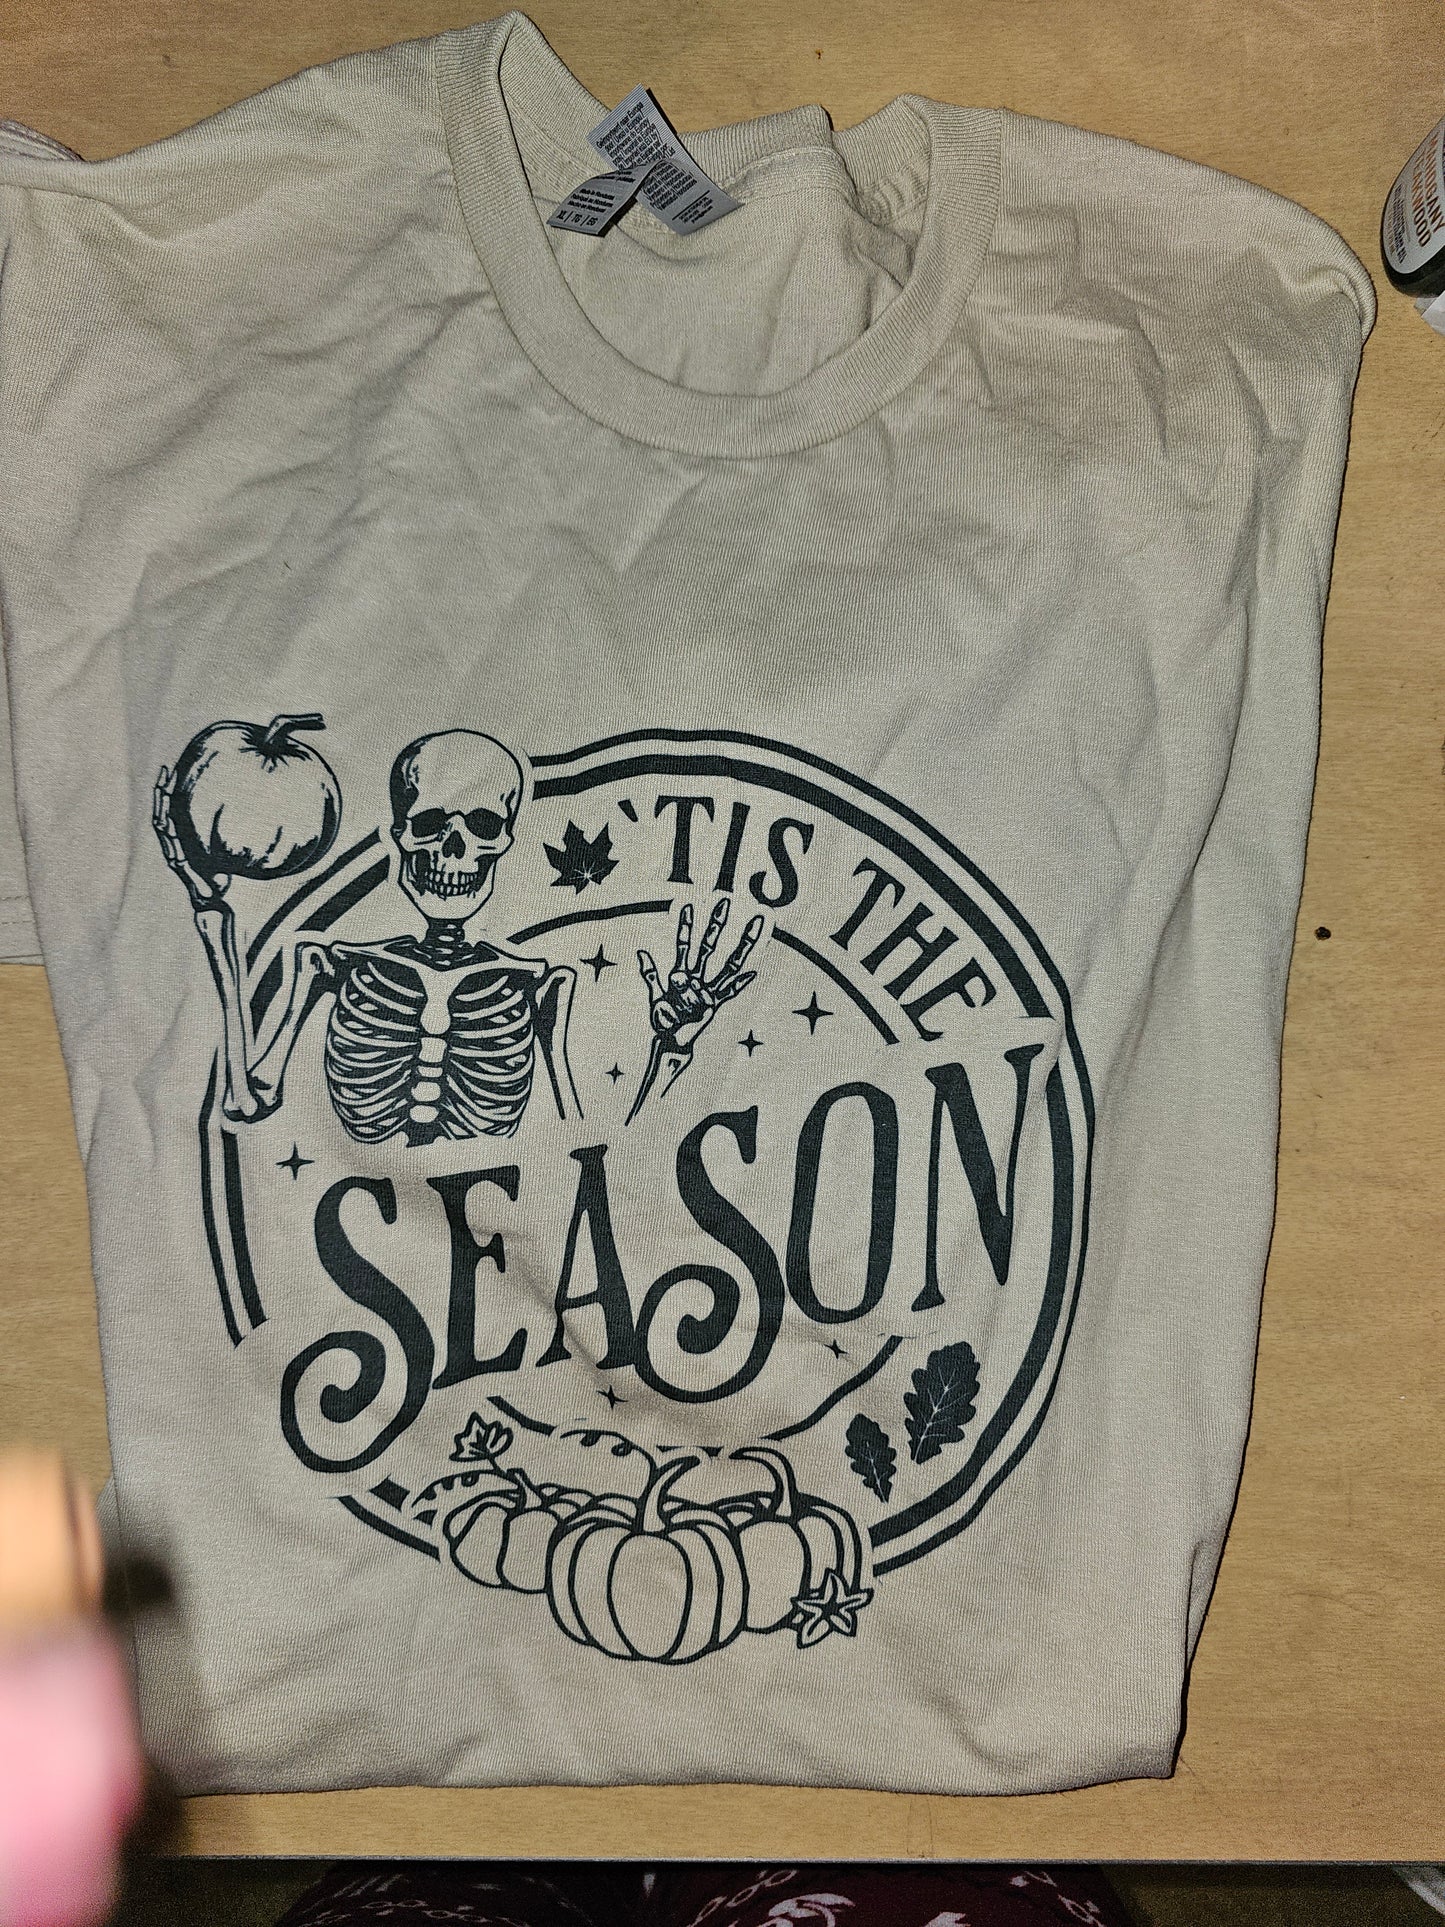 Tis the season t-shirt